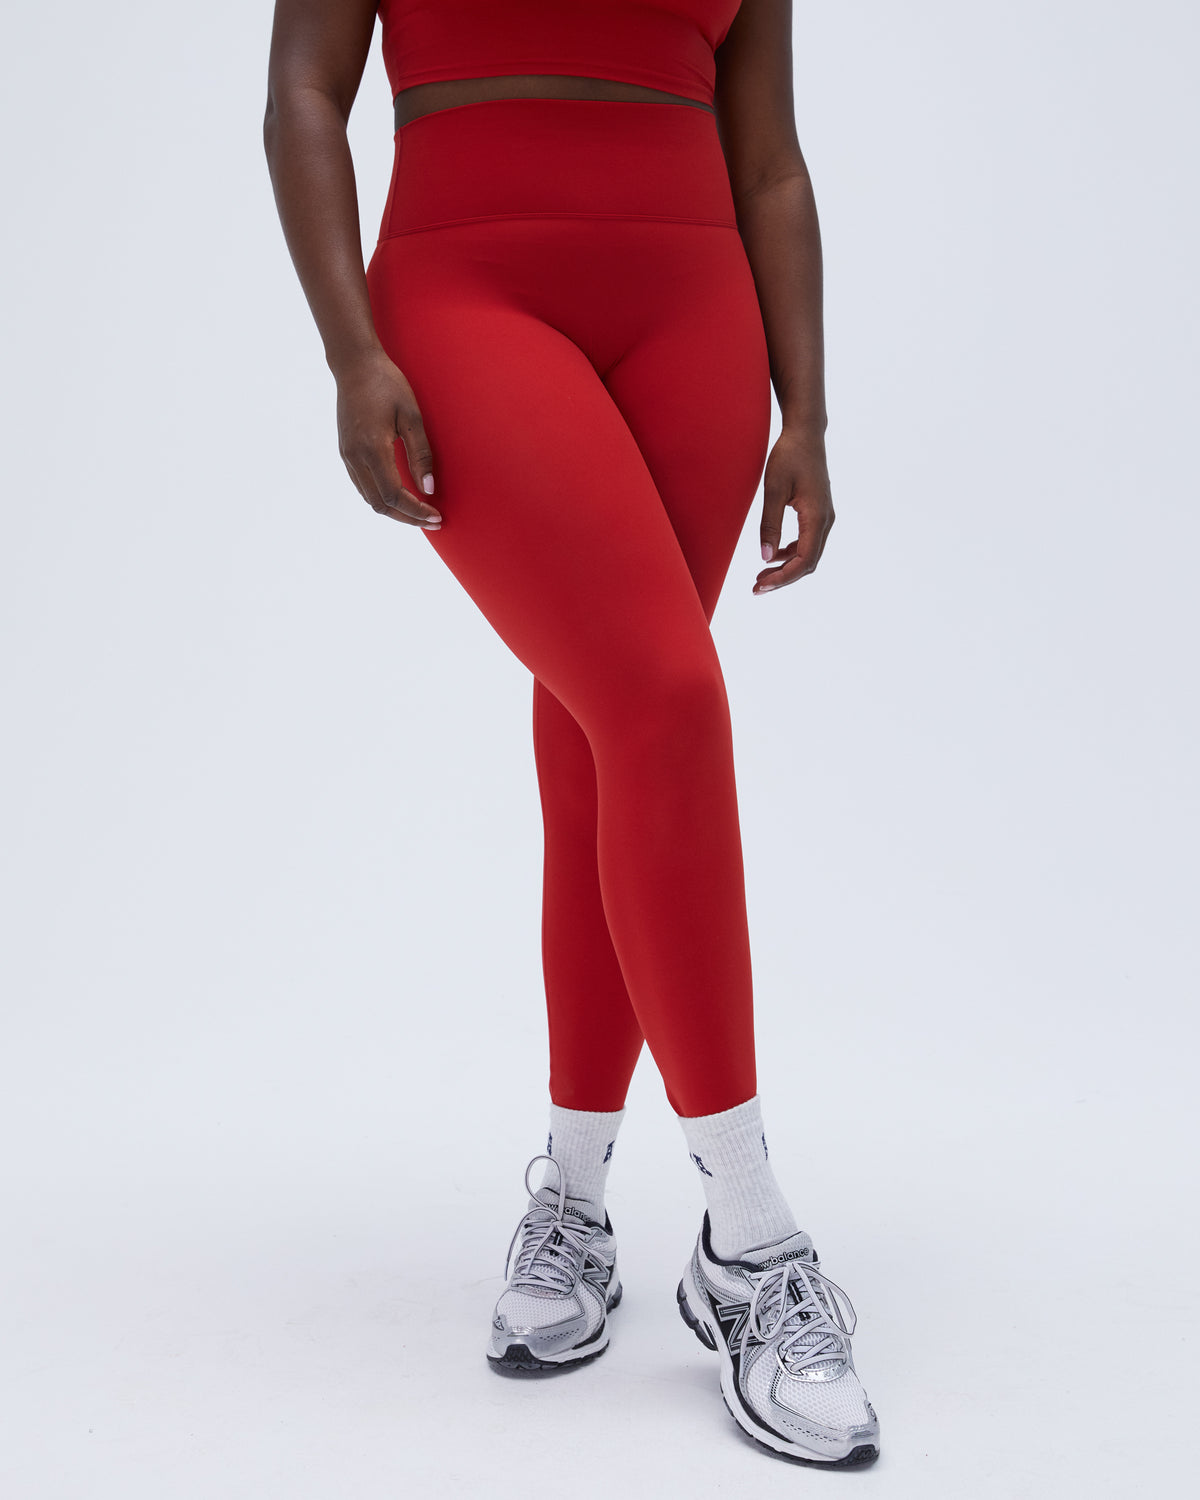 Classic Red Leggings High Waist – Body Angel Activewear